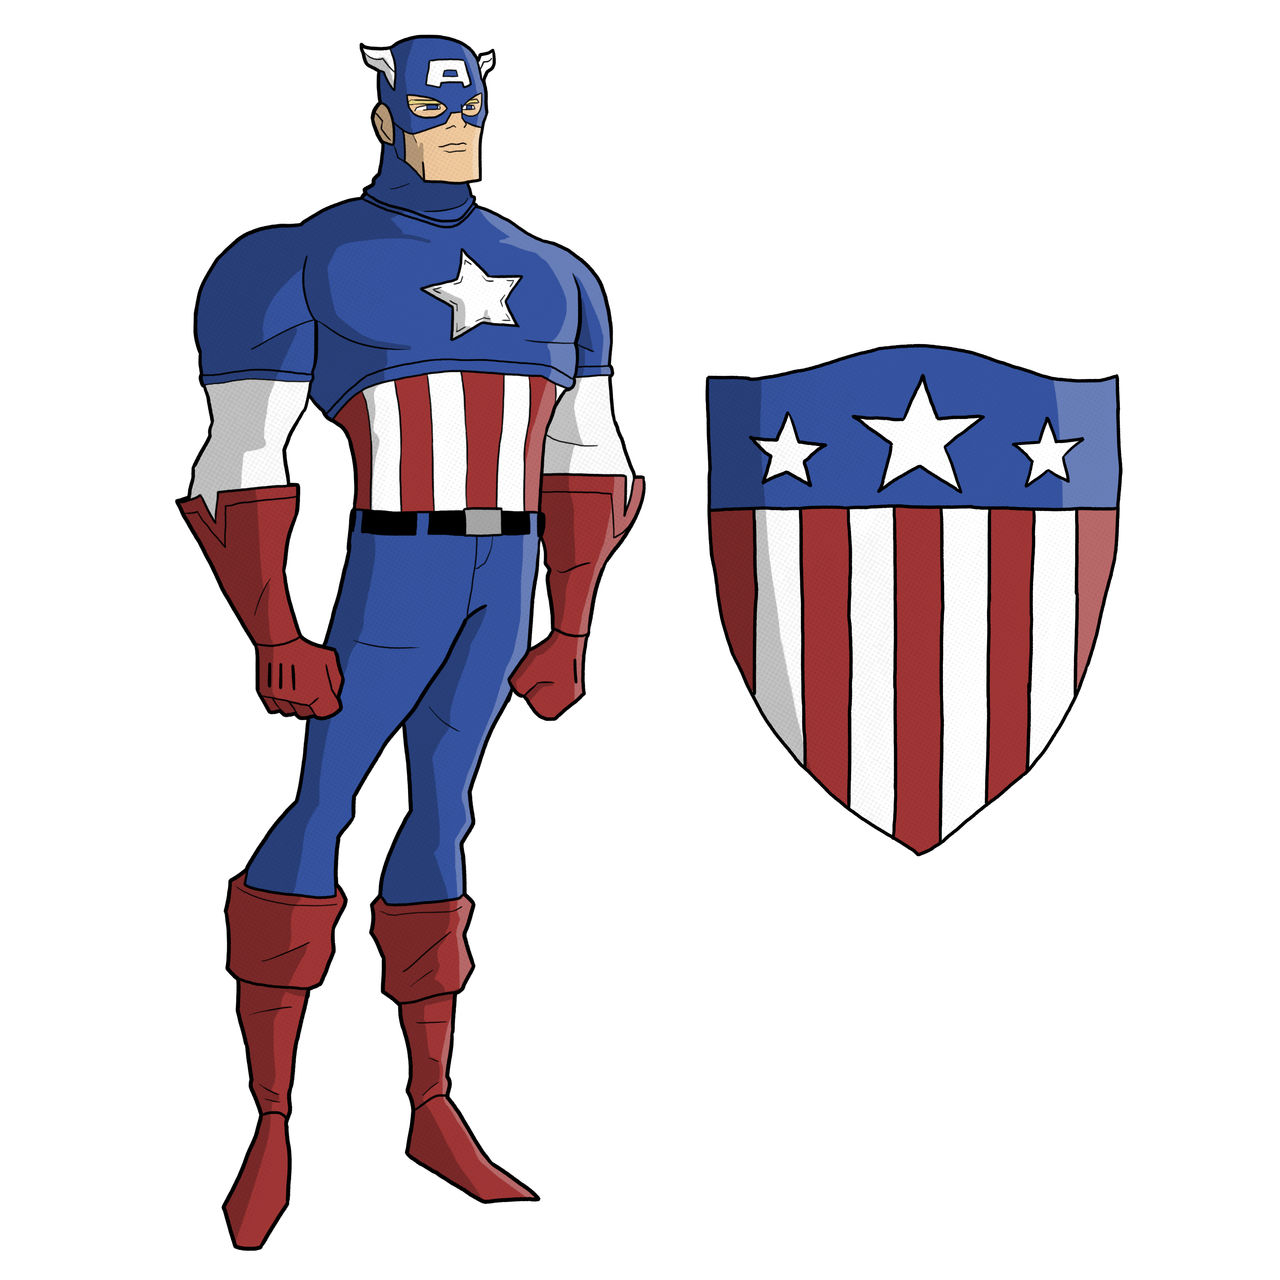 3 - Captain America (USO Suit) by NathanGravesArt on DeviantArt